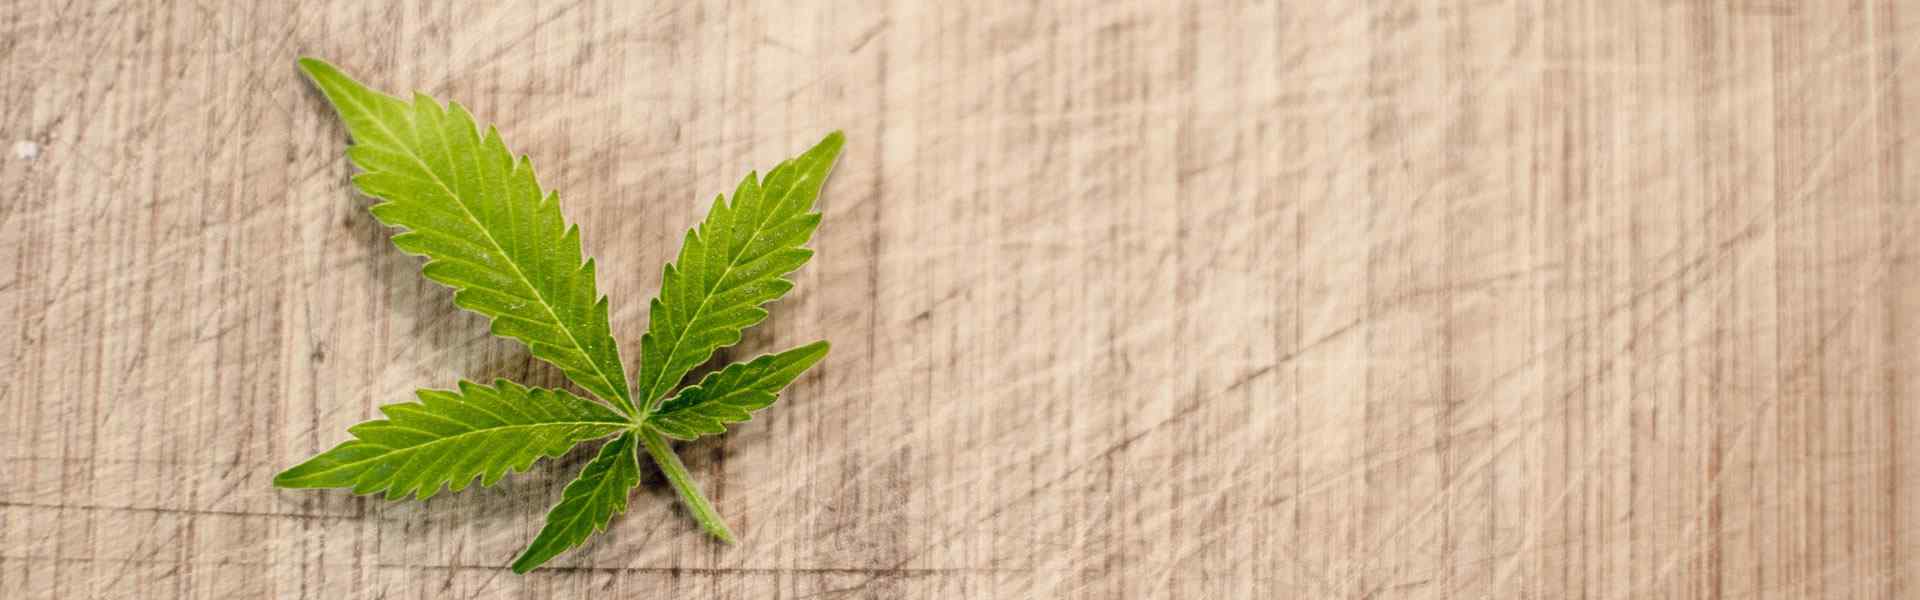 Pending Legalization of Marijuana